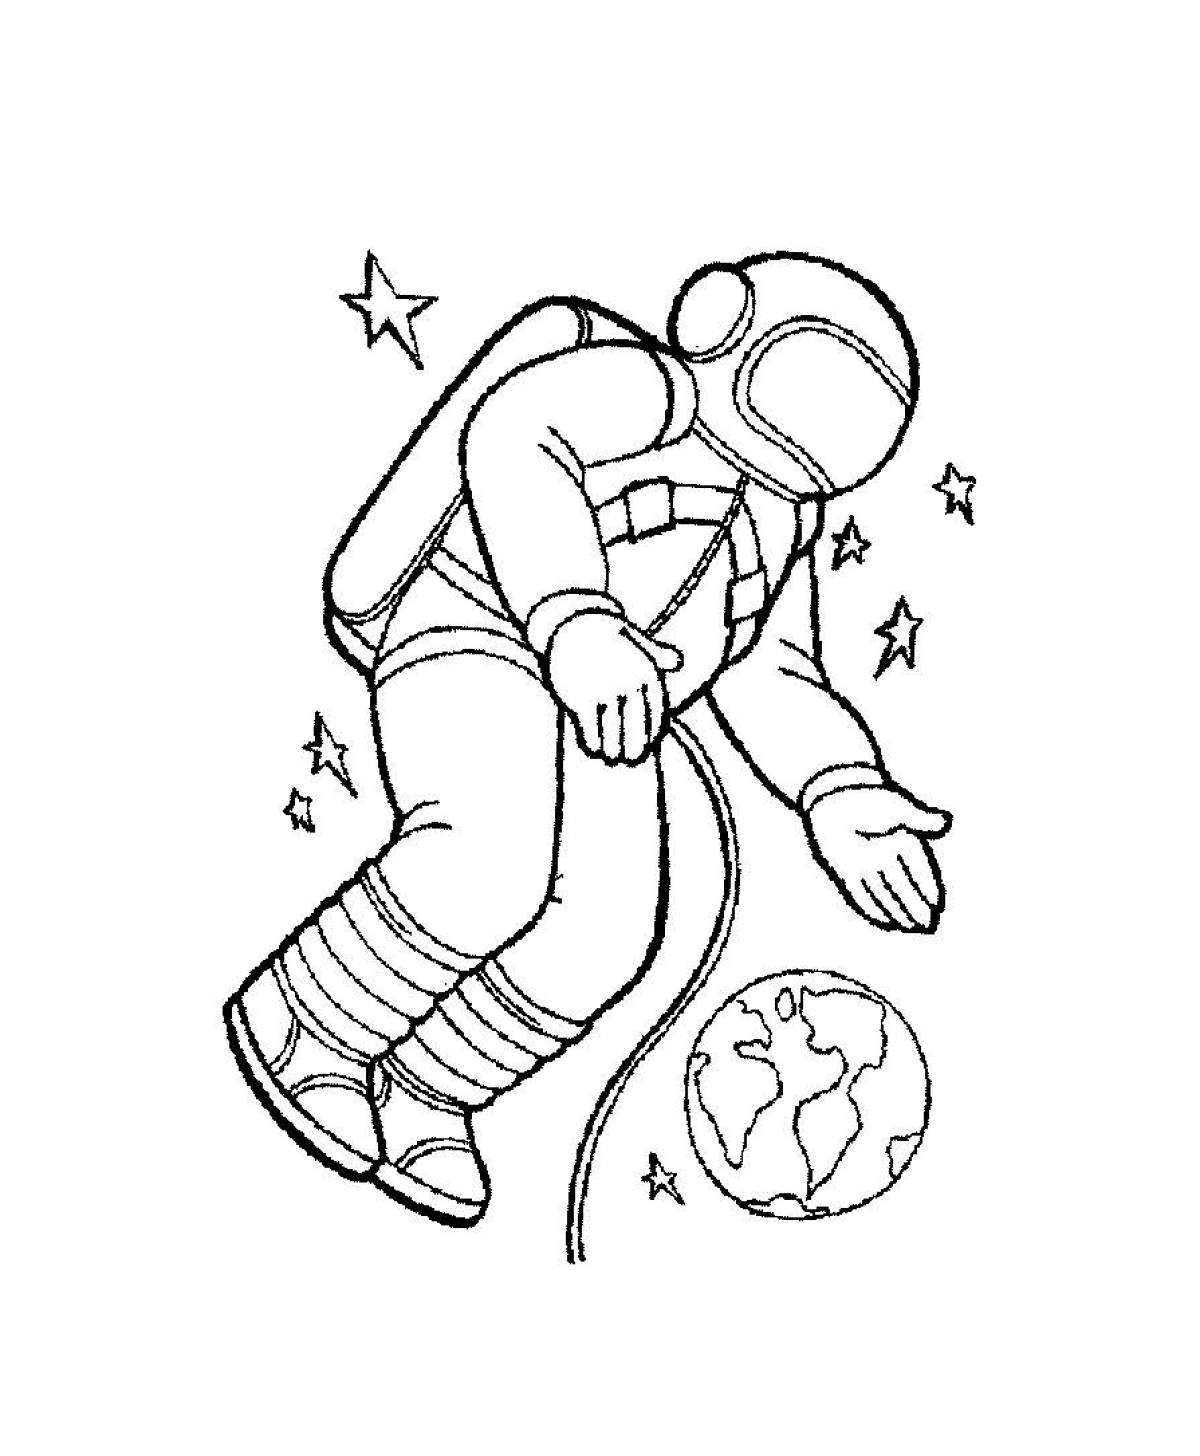 April 12 - Cosmonautics Day coloring page